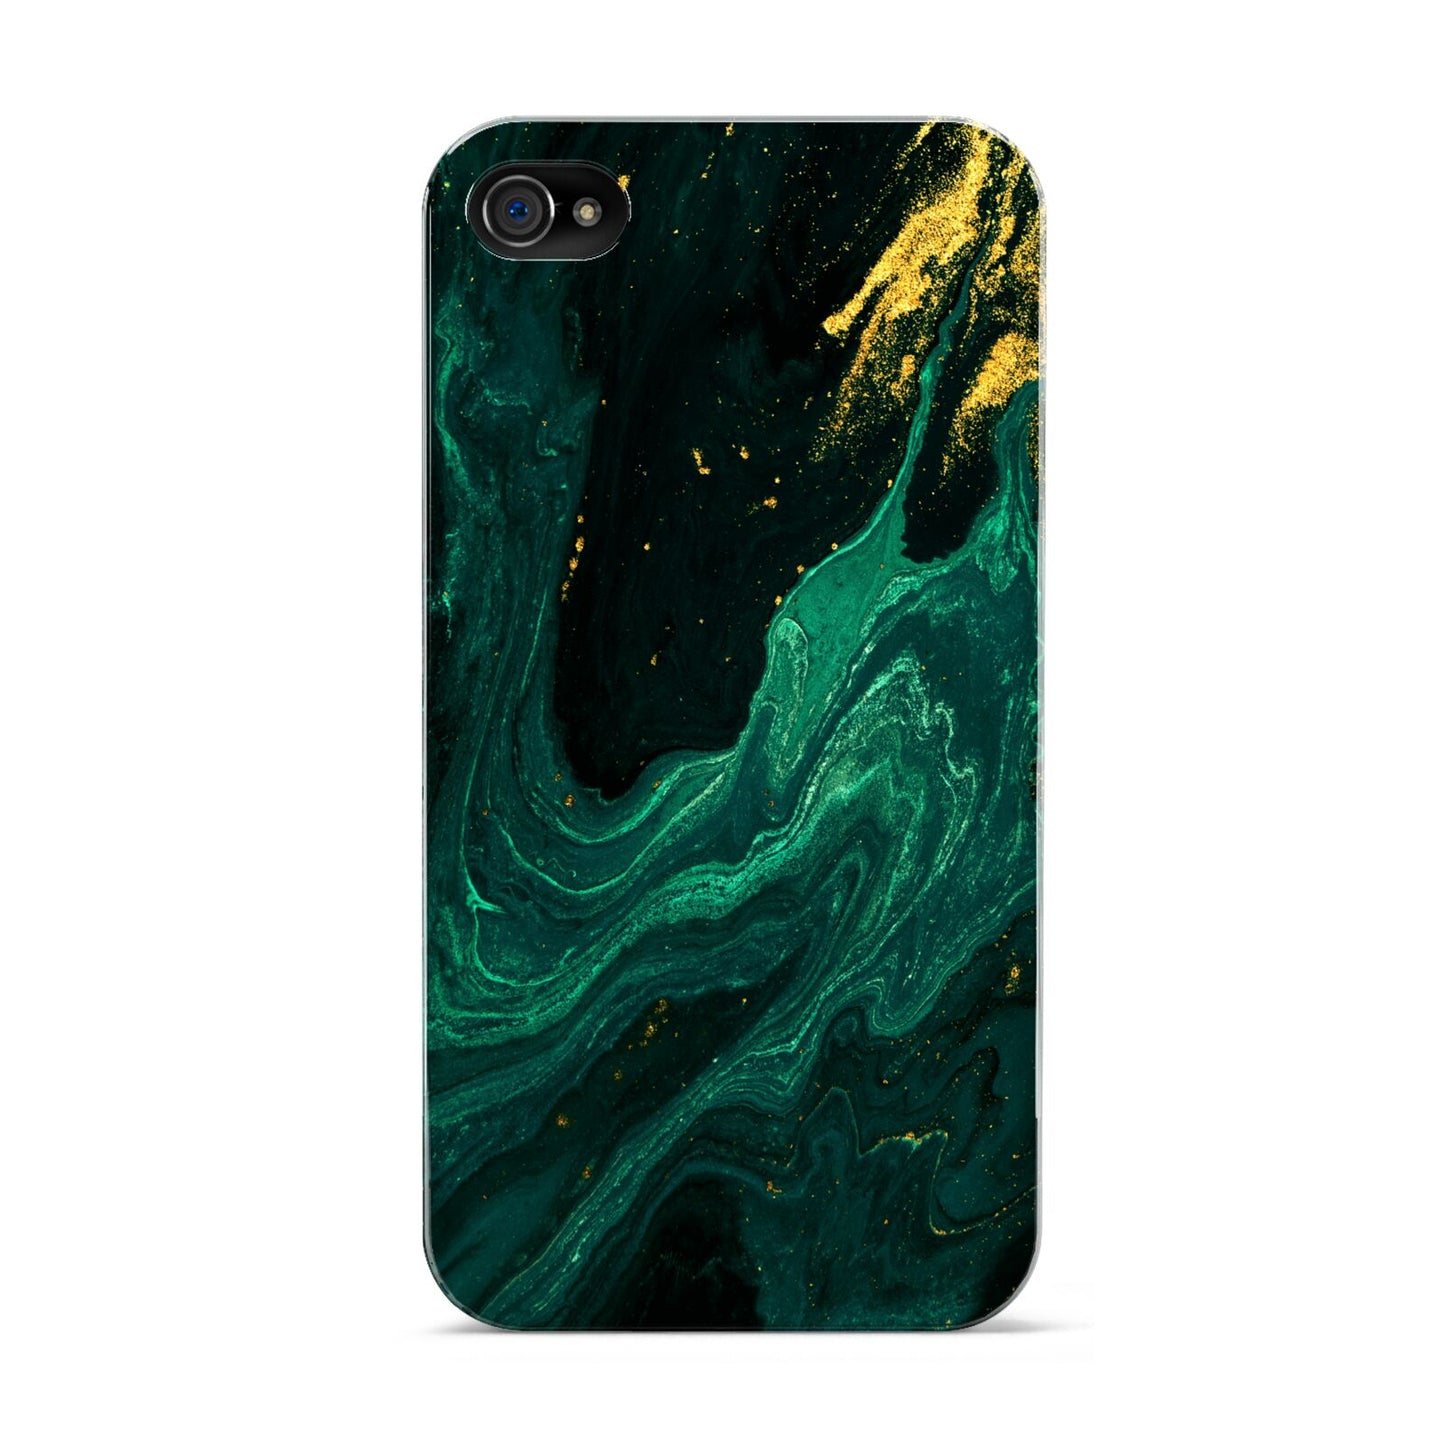 Emerald Green Apple iPhone 4s Case